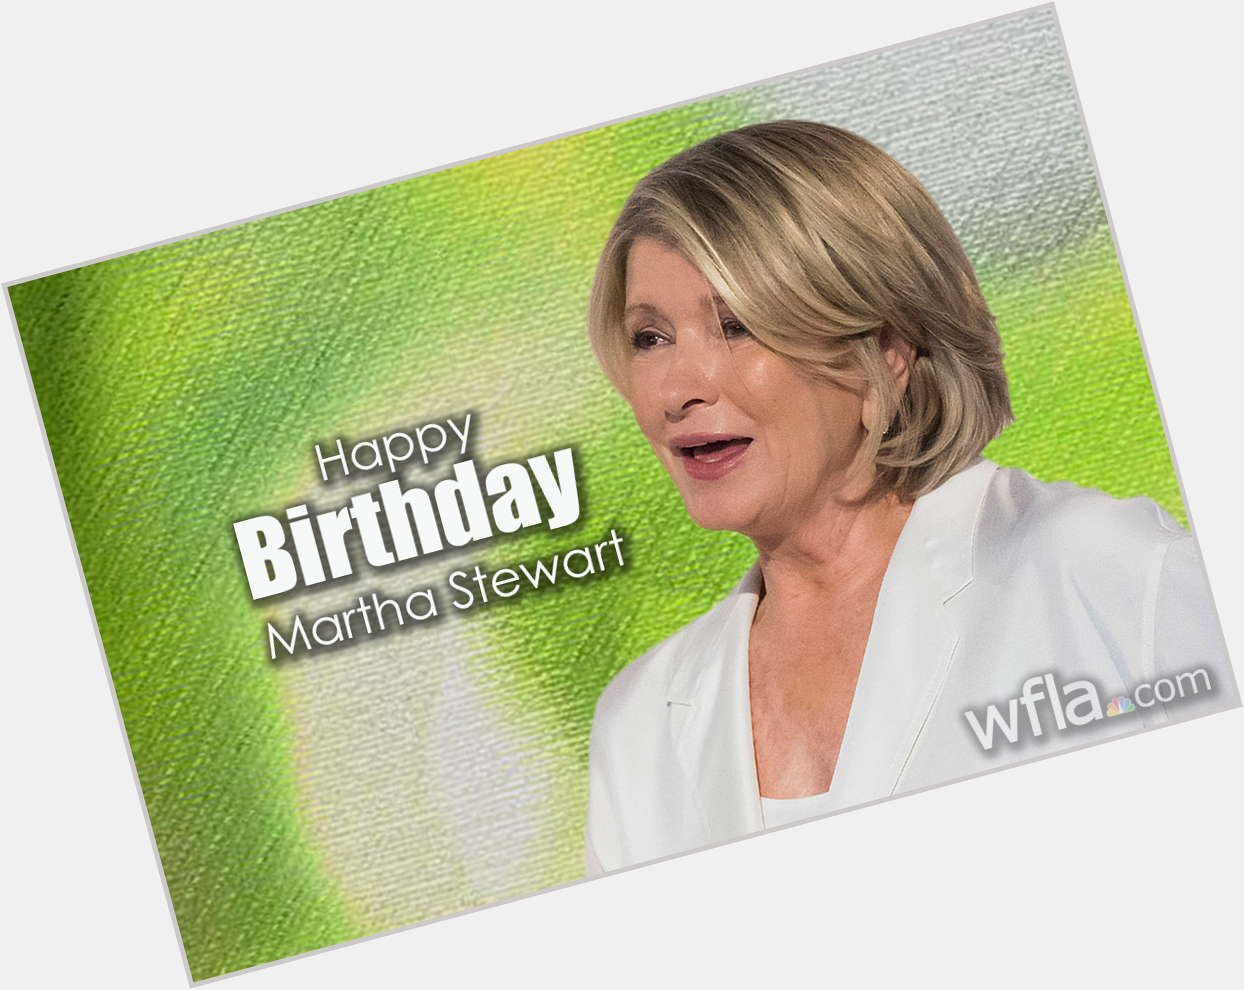 Happy 79th birthday to Martha Stewart!  